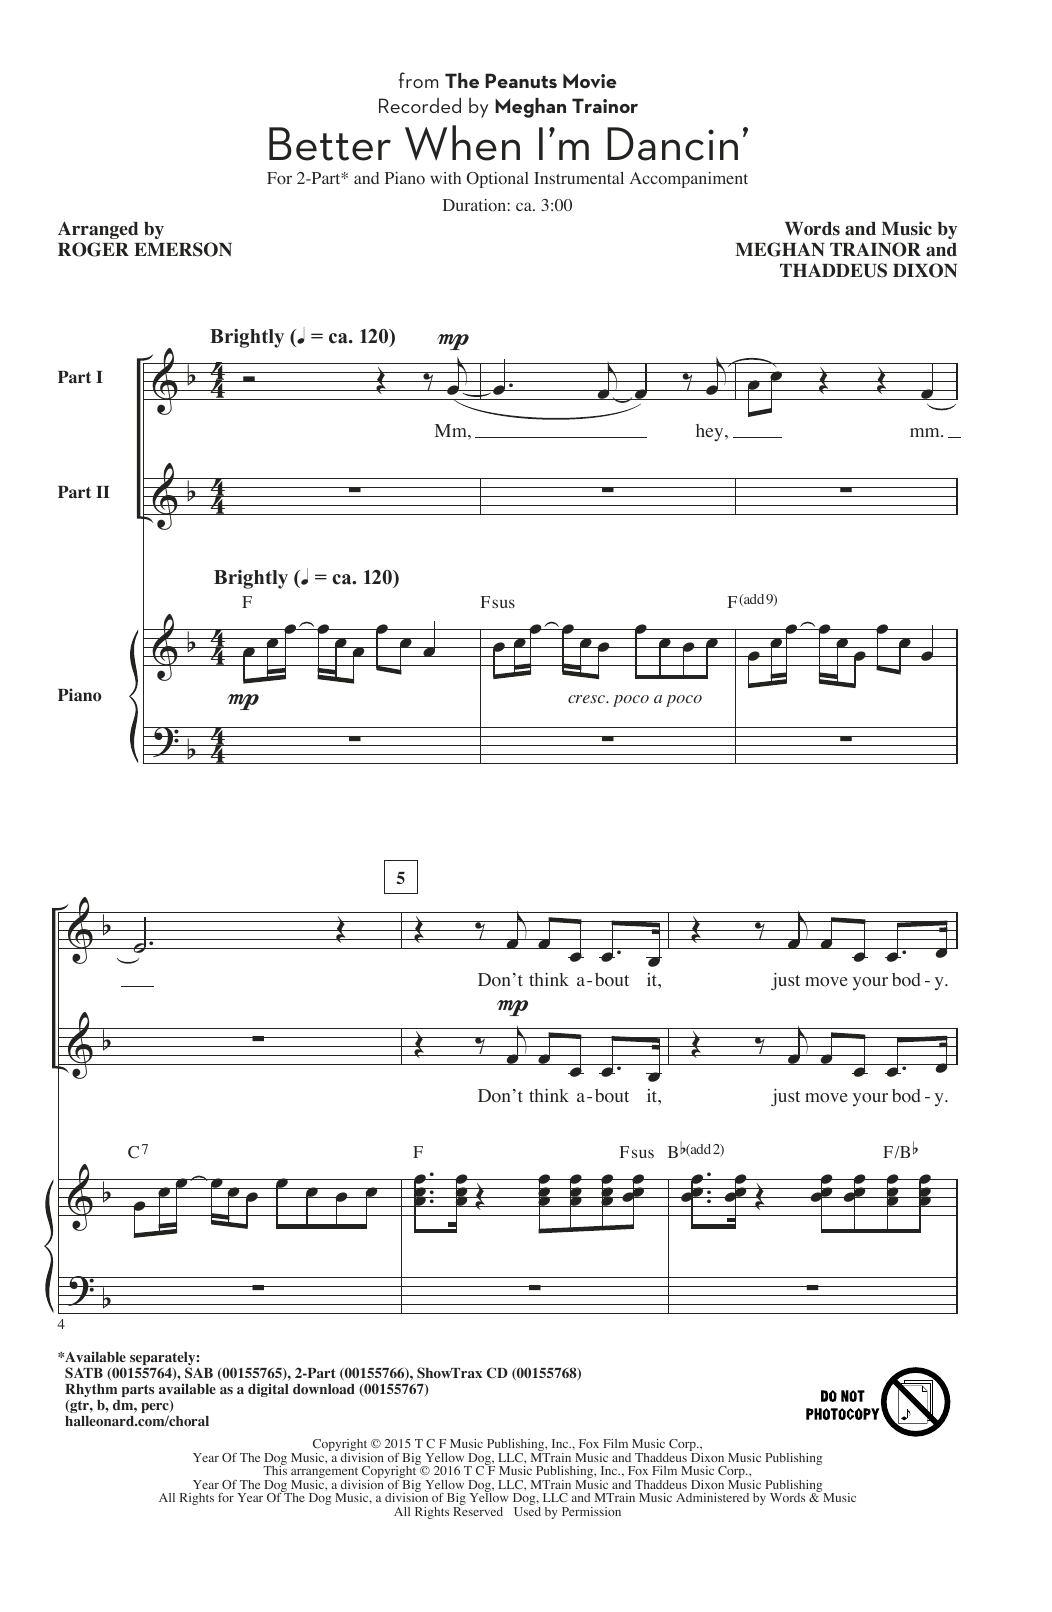 Meghan Trainor Better When I'm Dancin' (arr. Roger Emerson) Sheet Music Notes & Chords for 2-Part Choir - Download or Print PDF